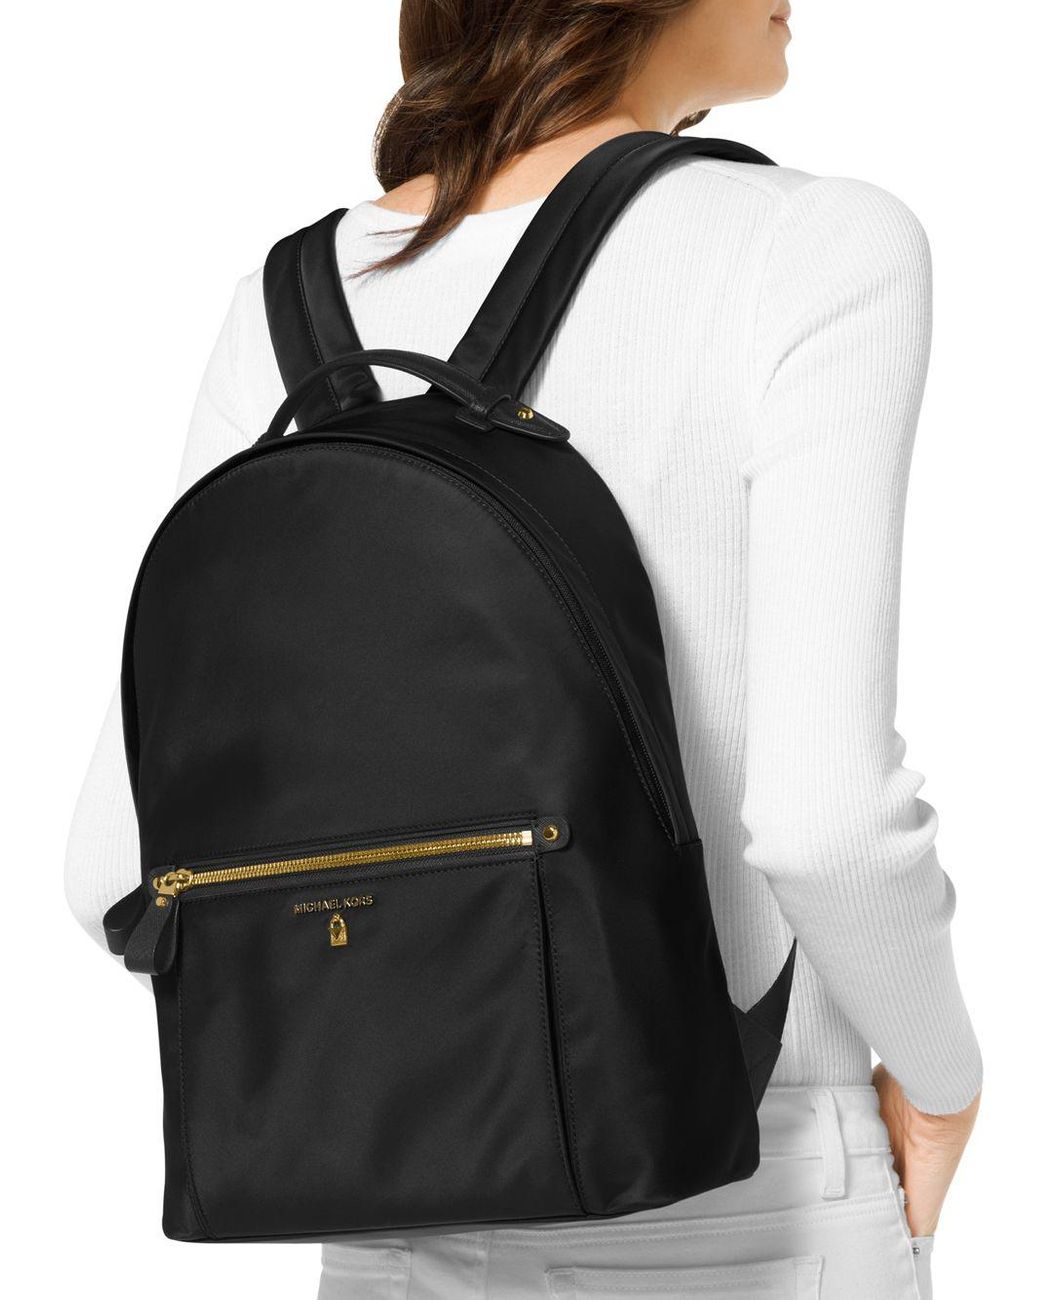 BAG WIZARD Backpack for Women Nylon Travel Backpack Purse Black India | Ubuy